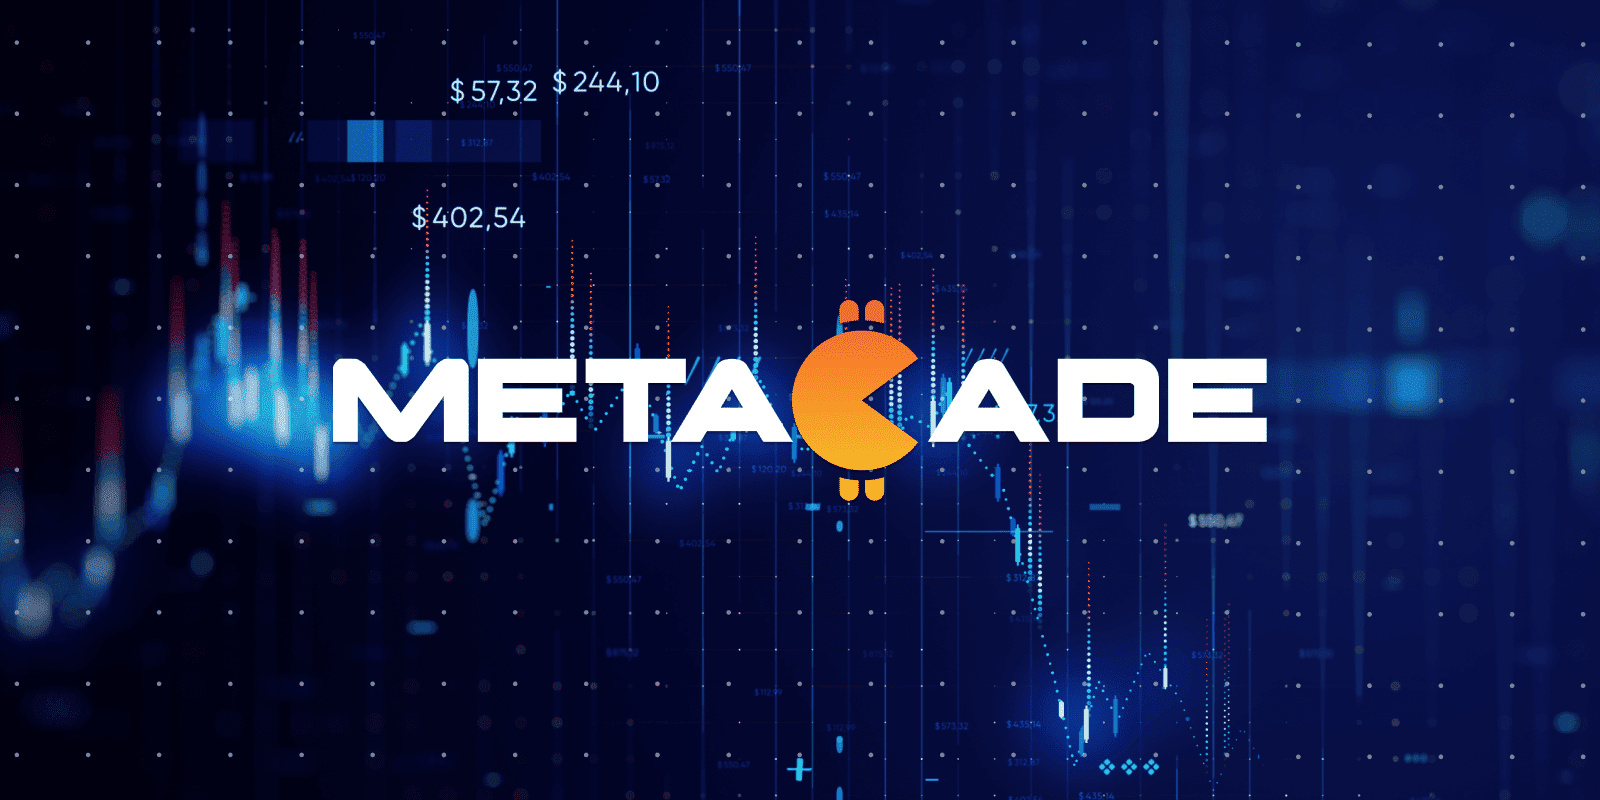 Le logo de Metacade